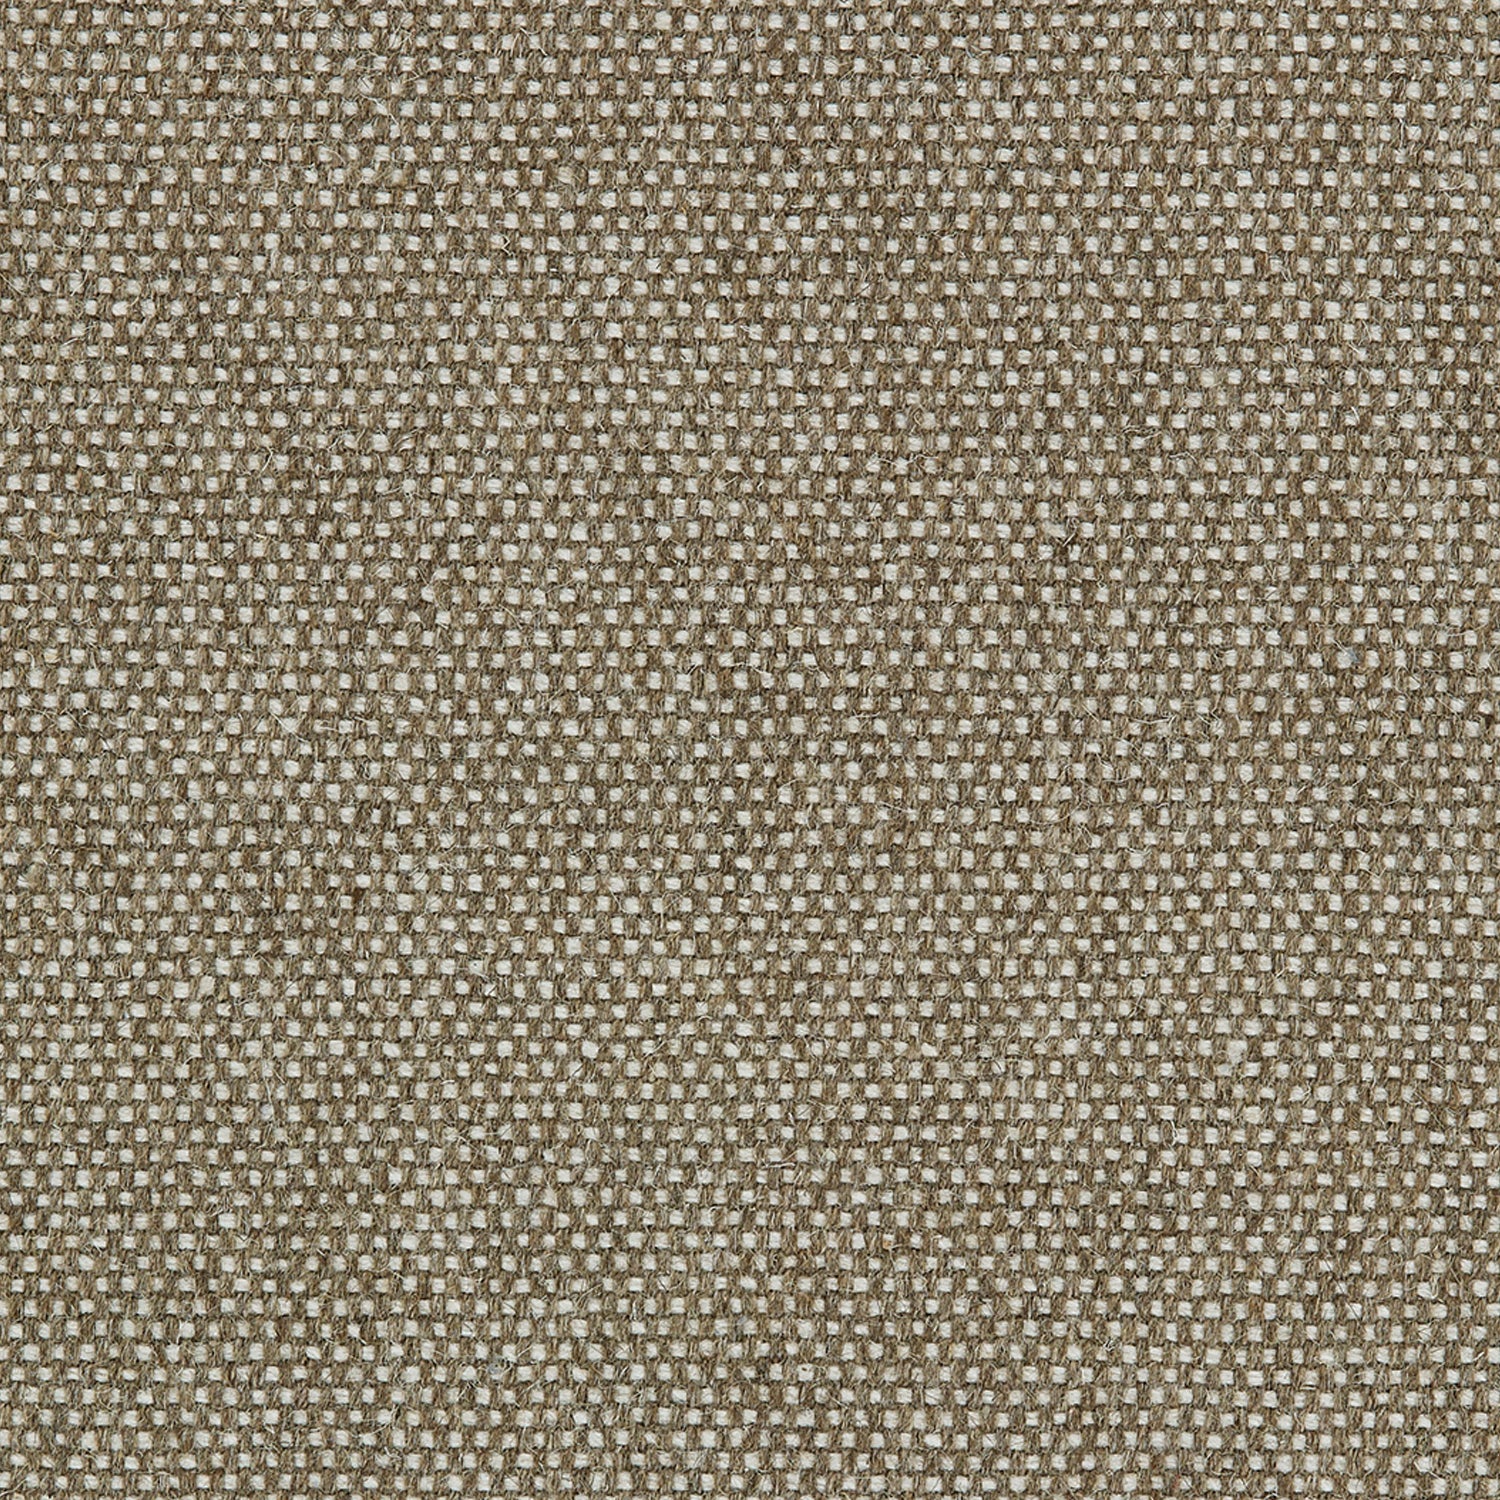 Wool broadloom carpet swatch in a flat grid weave in cream and light brown.